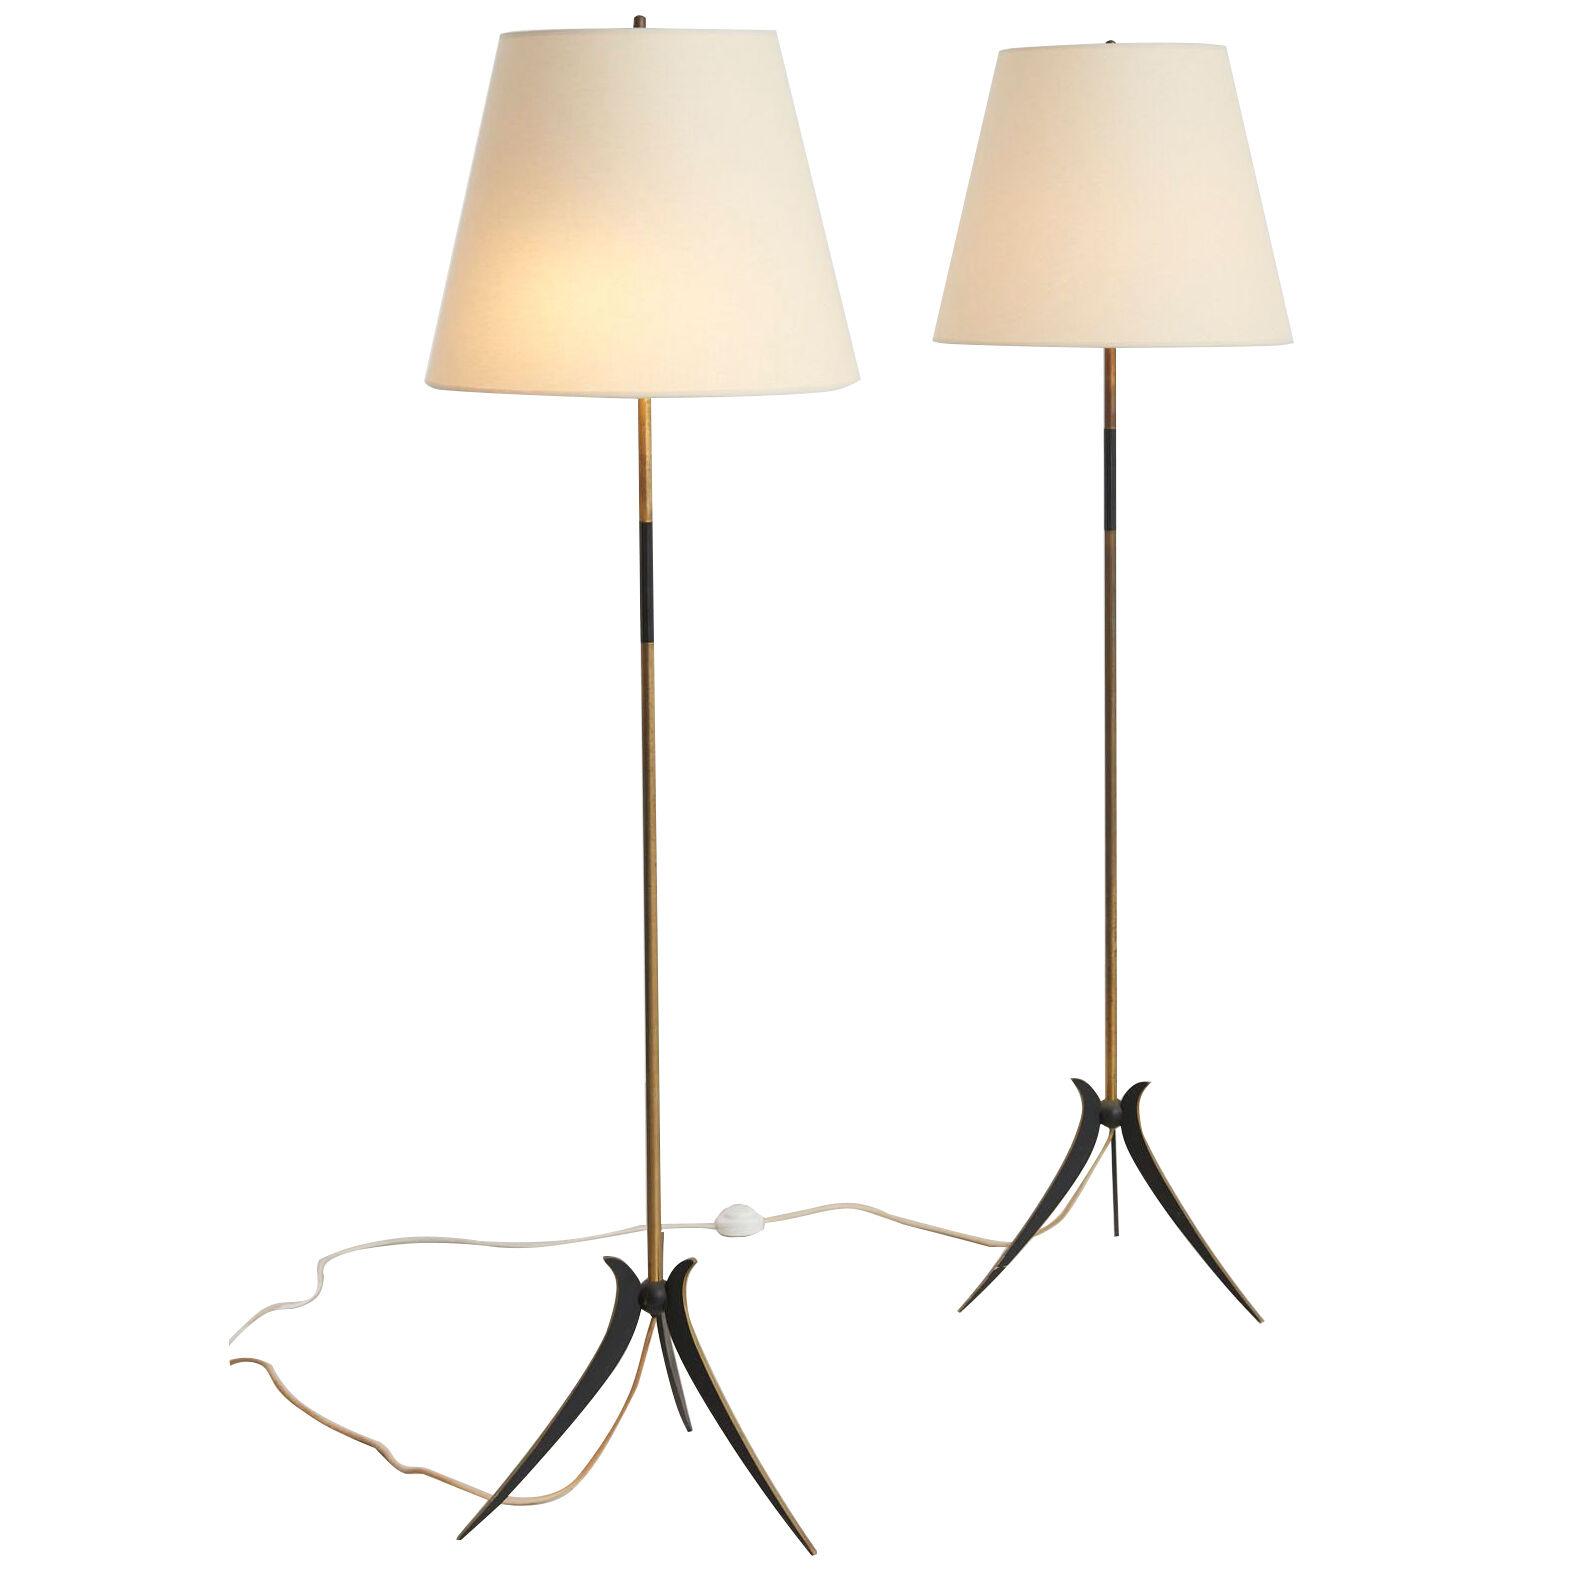 Pair of Italian Floor Lamps - 1950's